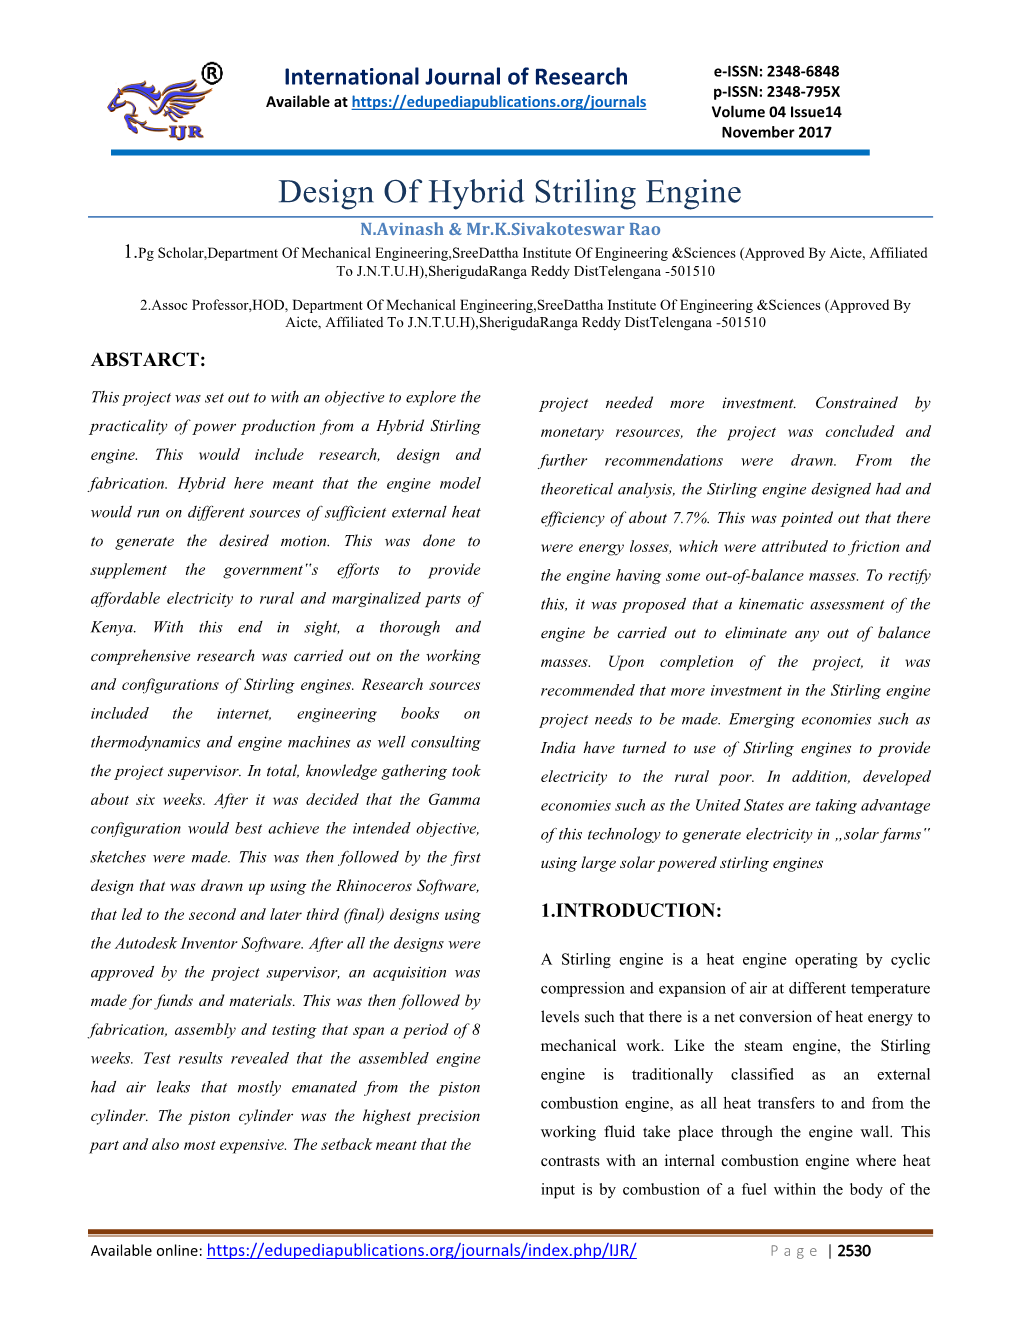 Design of Hybrid Striling Engine